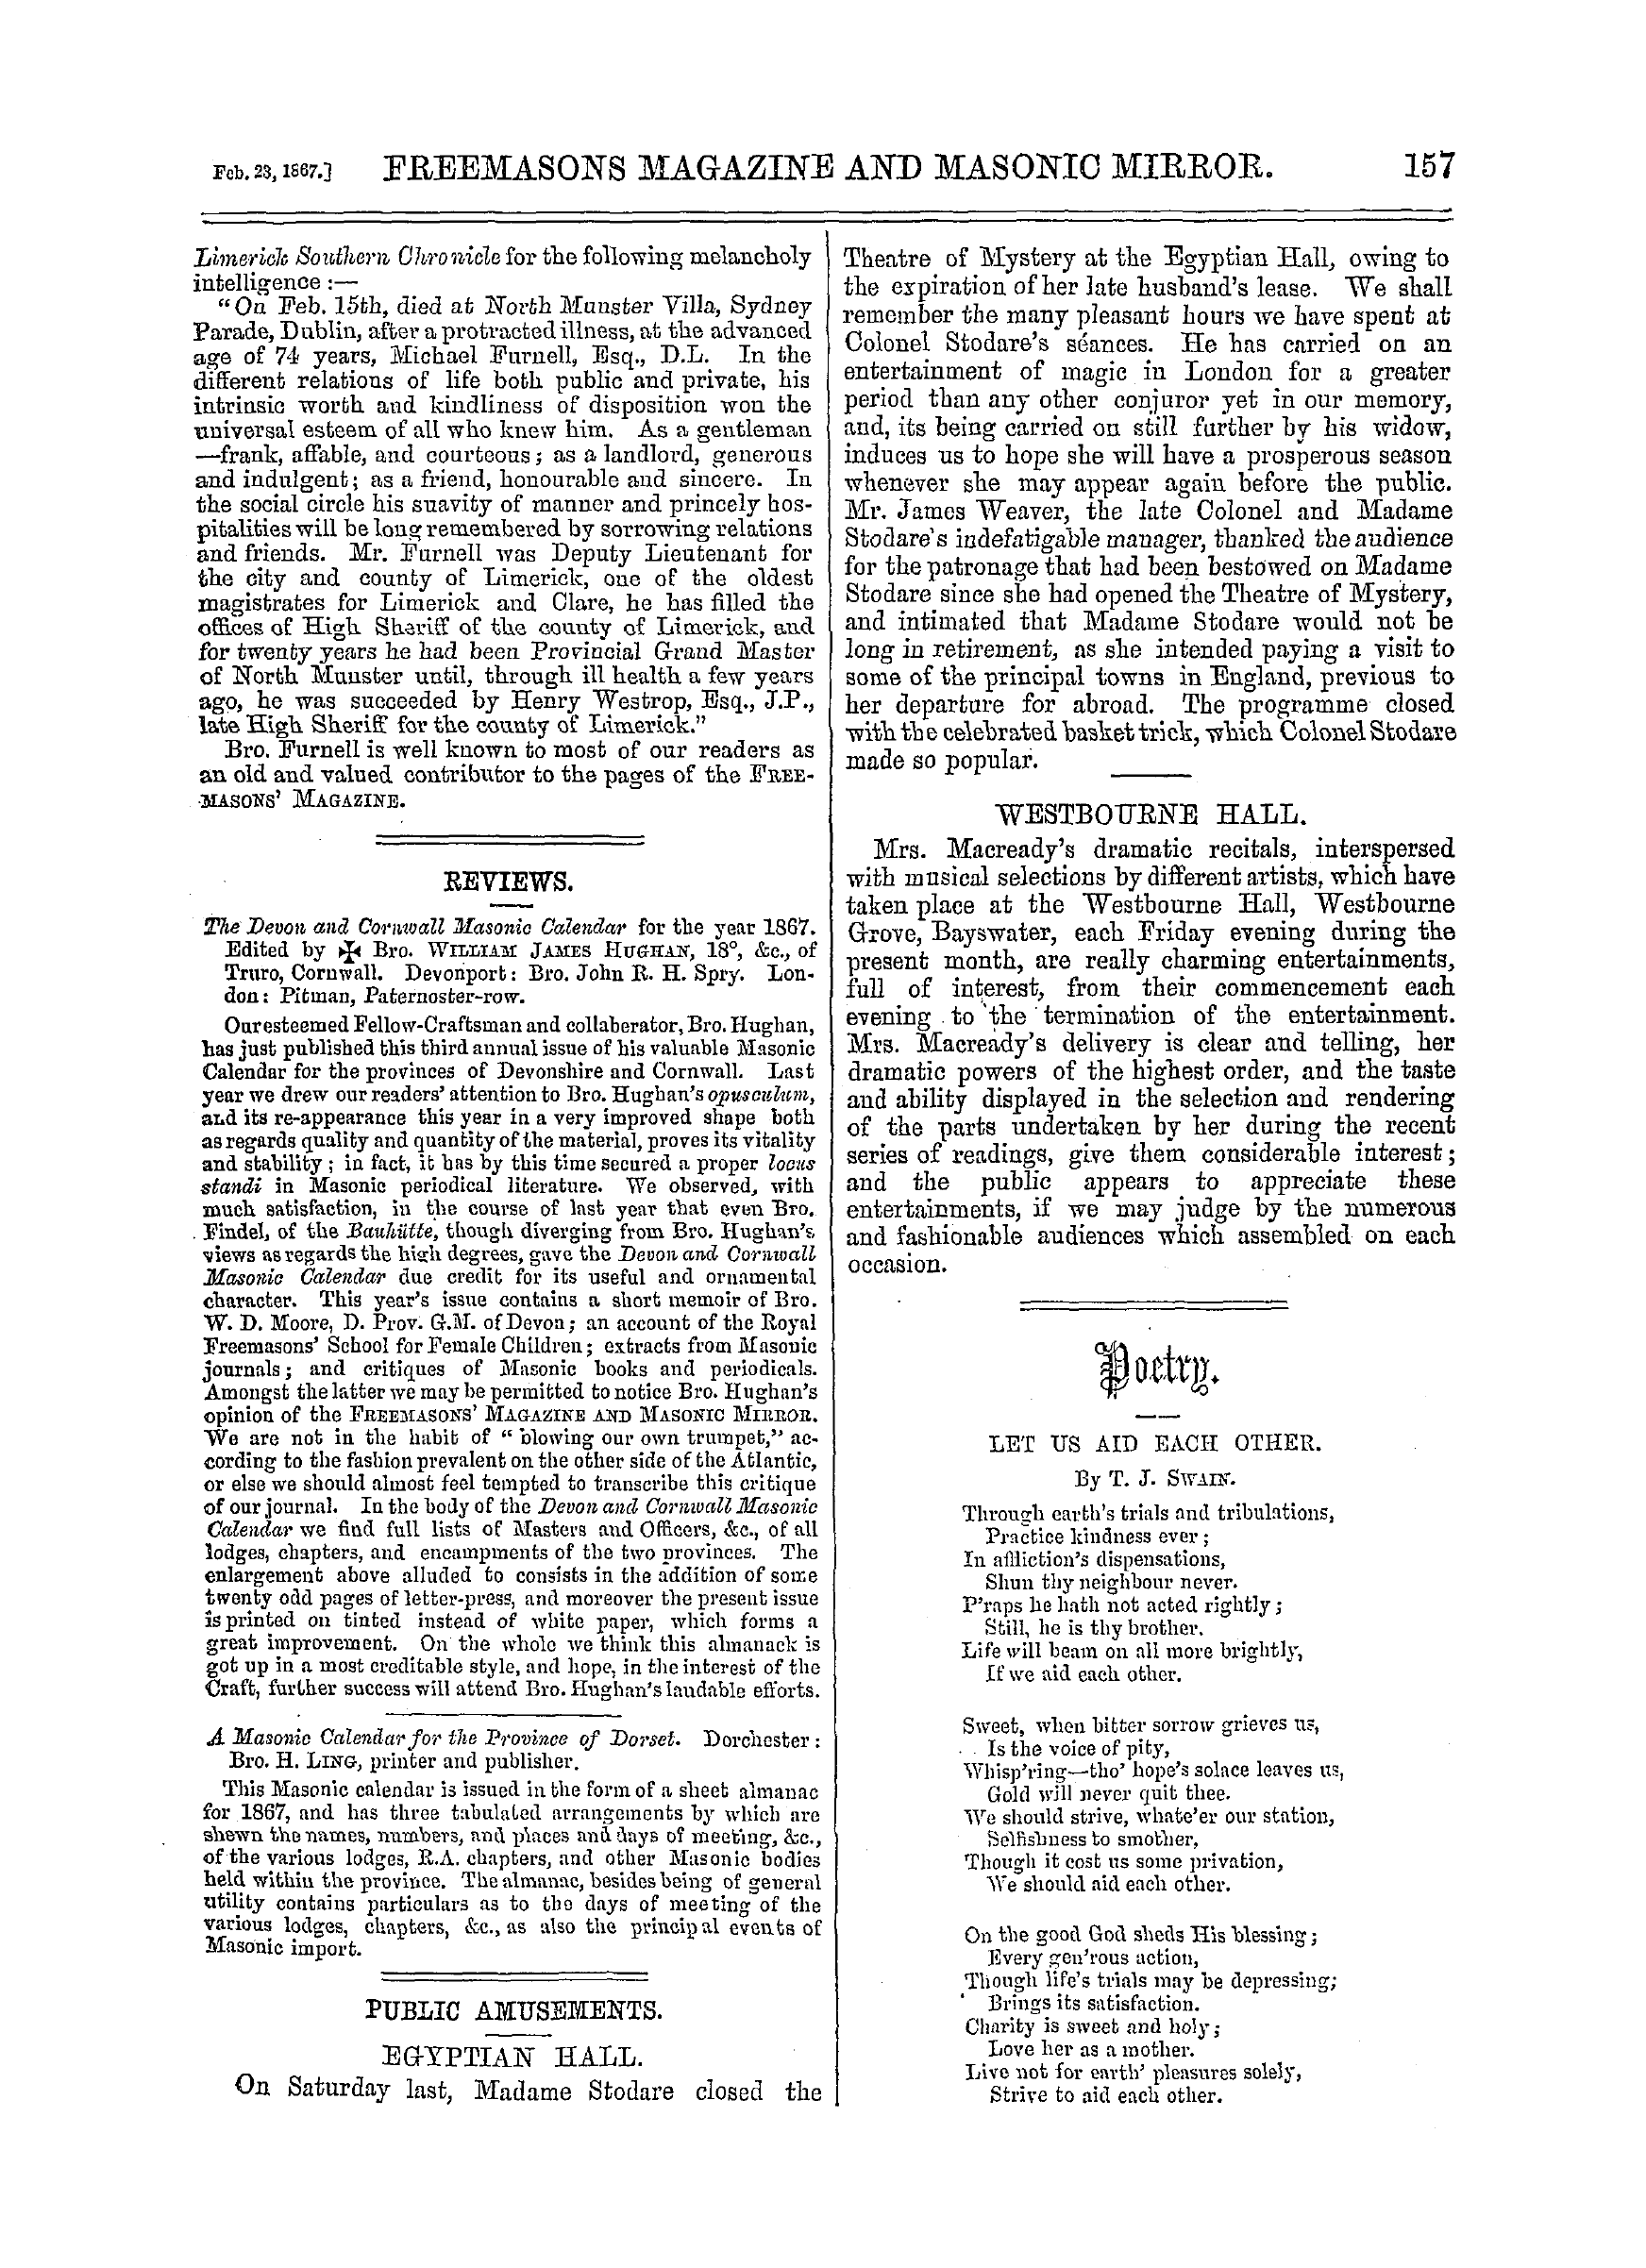 The Freemasons' Monthly Magazine: 1867-02-23 - Reviews.